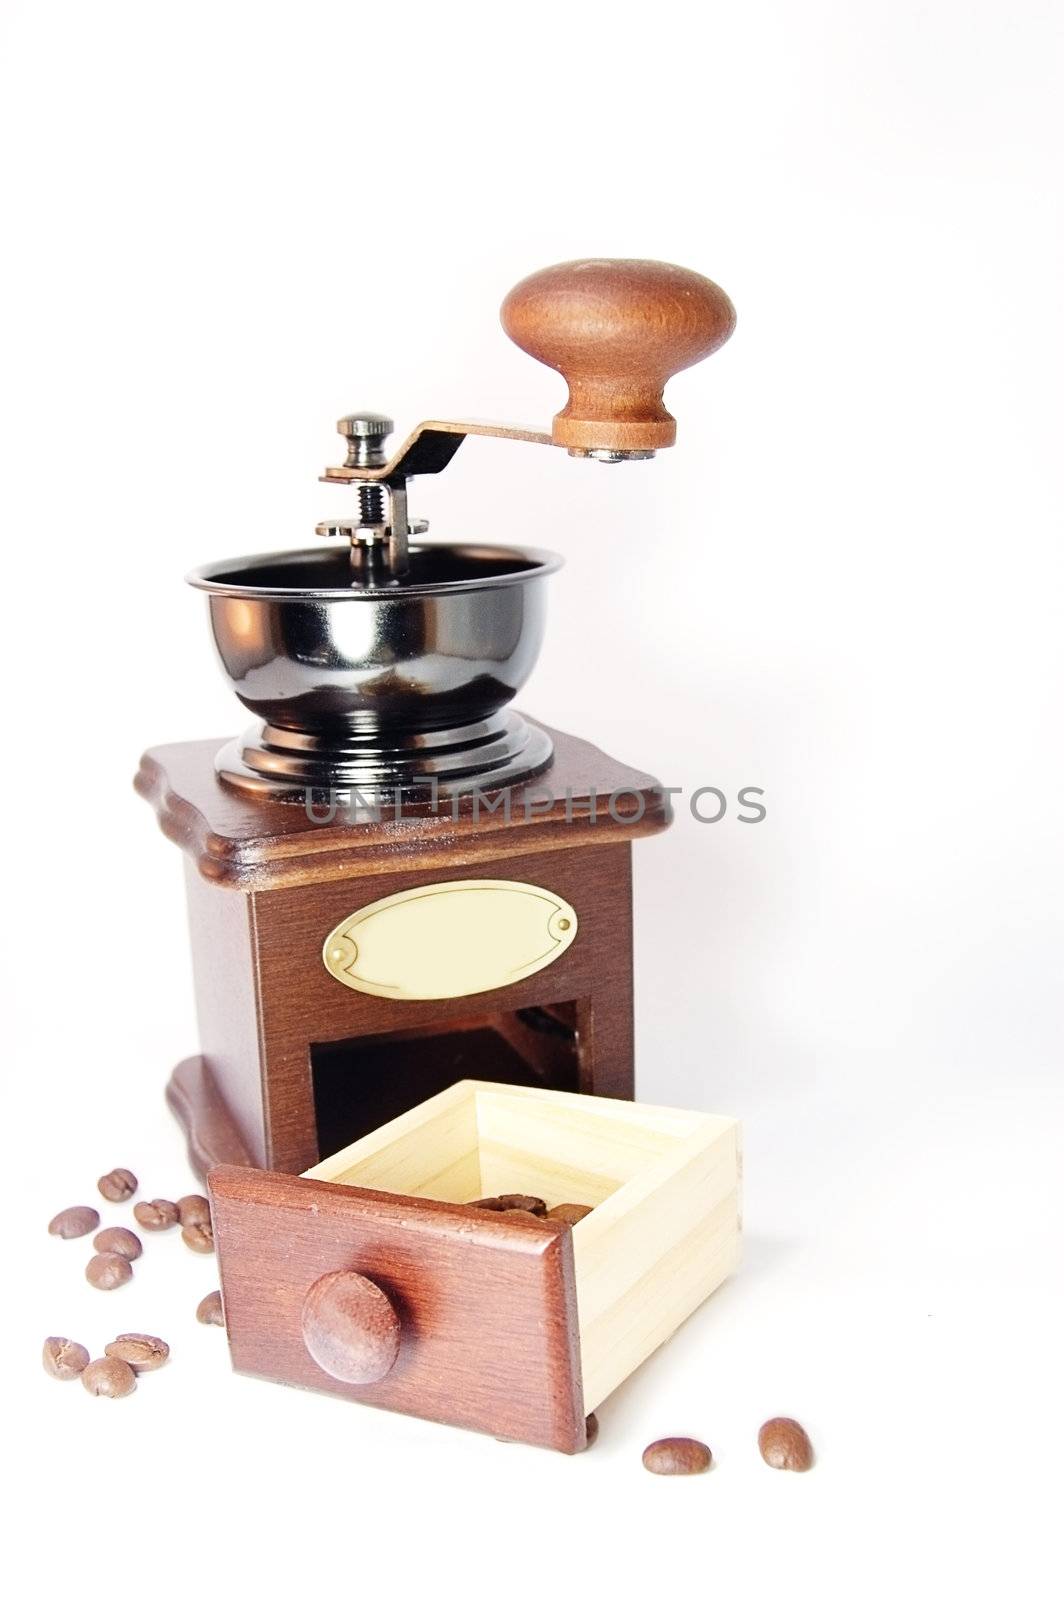 Coffee grinder by Angel_a